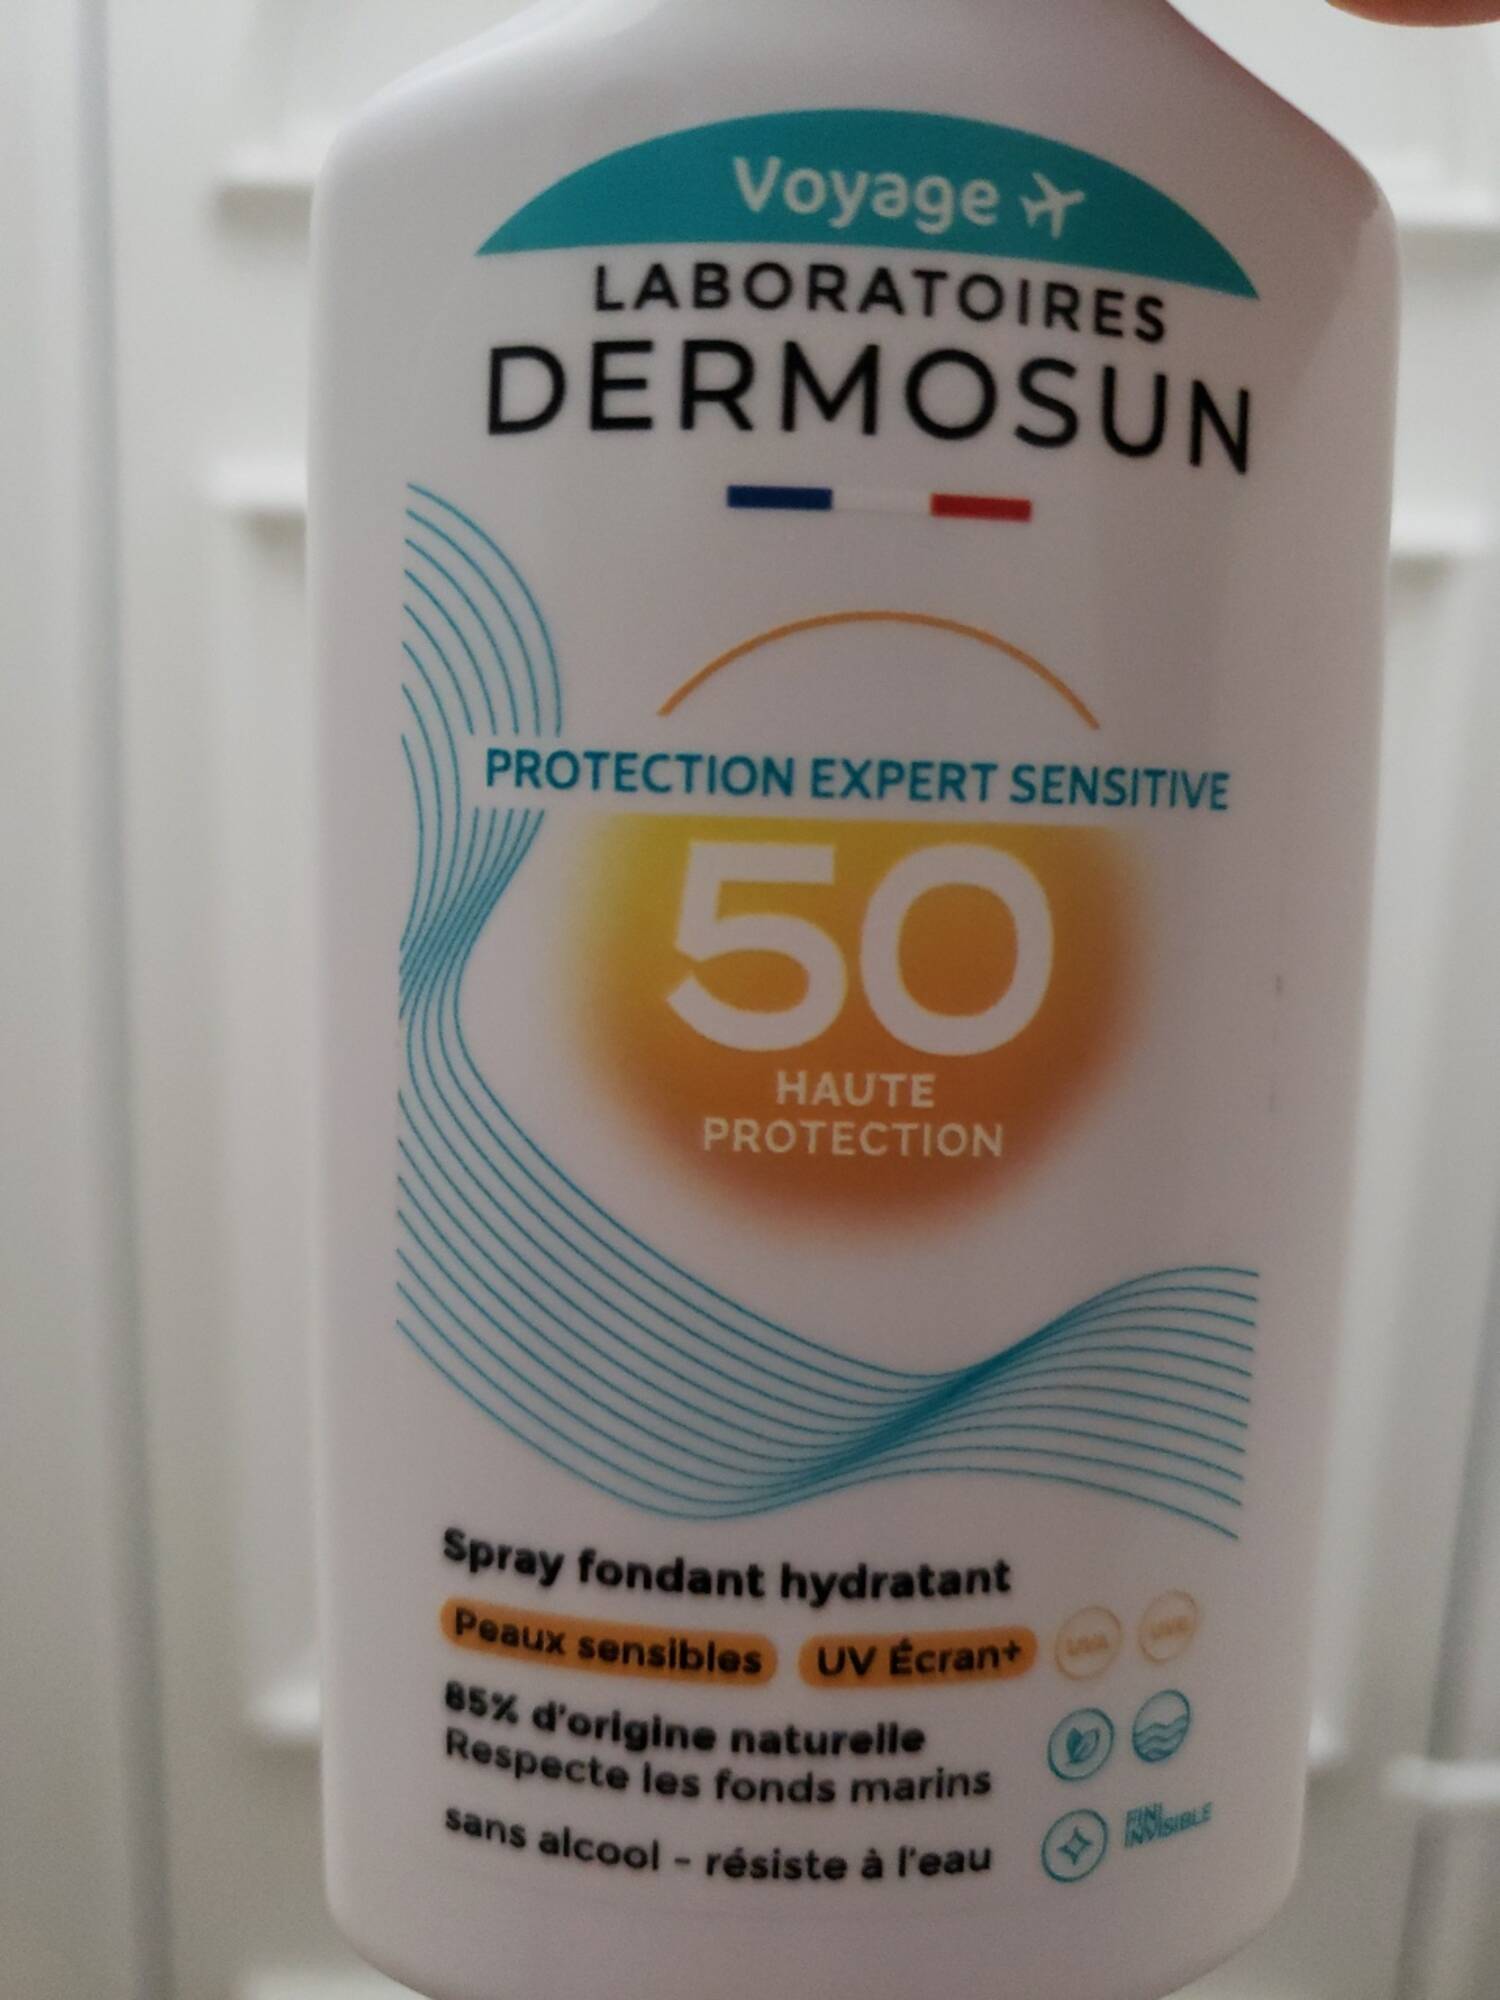 LABORATOIRES DERMOSUN - Protection expert sensitive - Spray fondant hydratant SPF 50